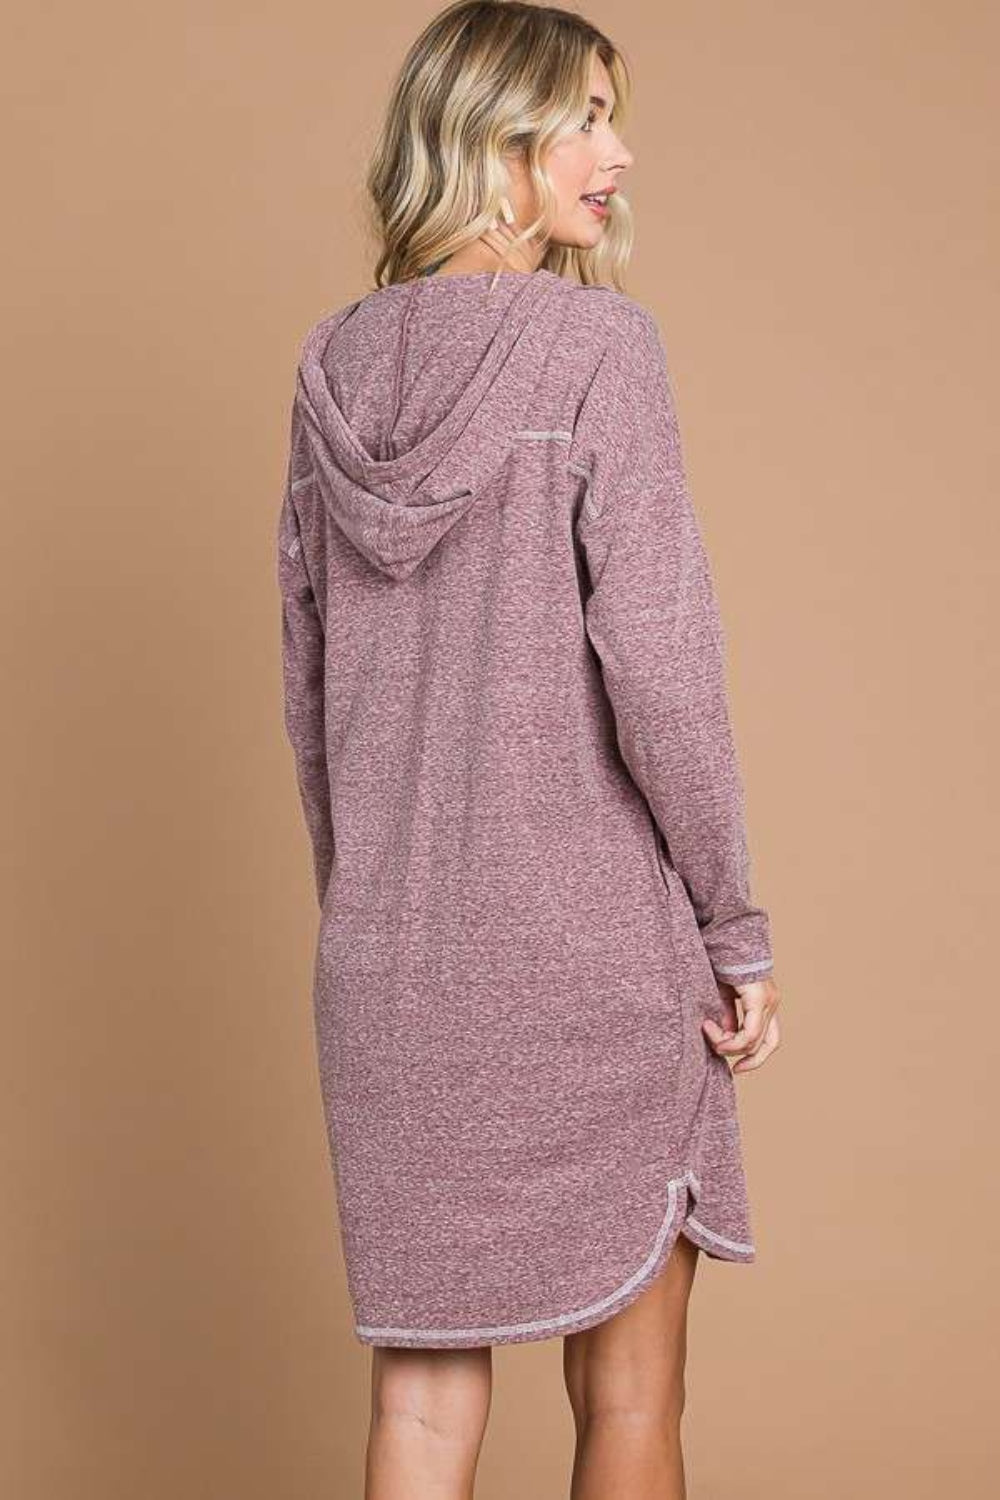 Hooded Long Sleeve Sweater Dress